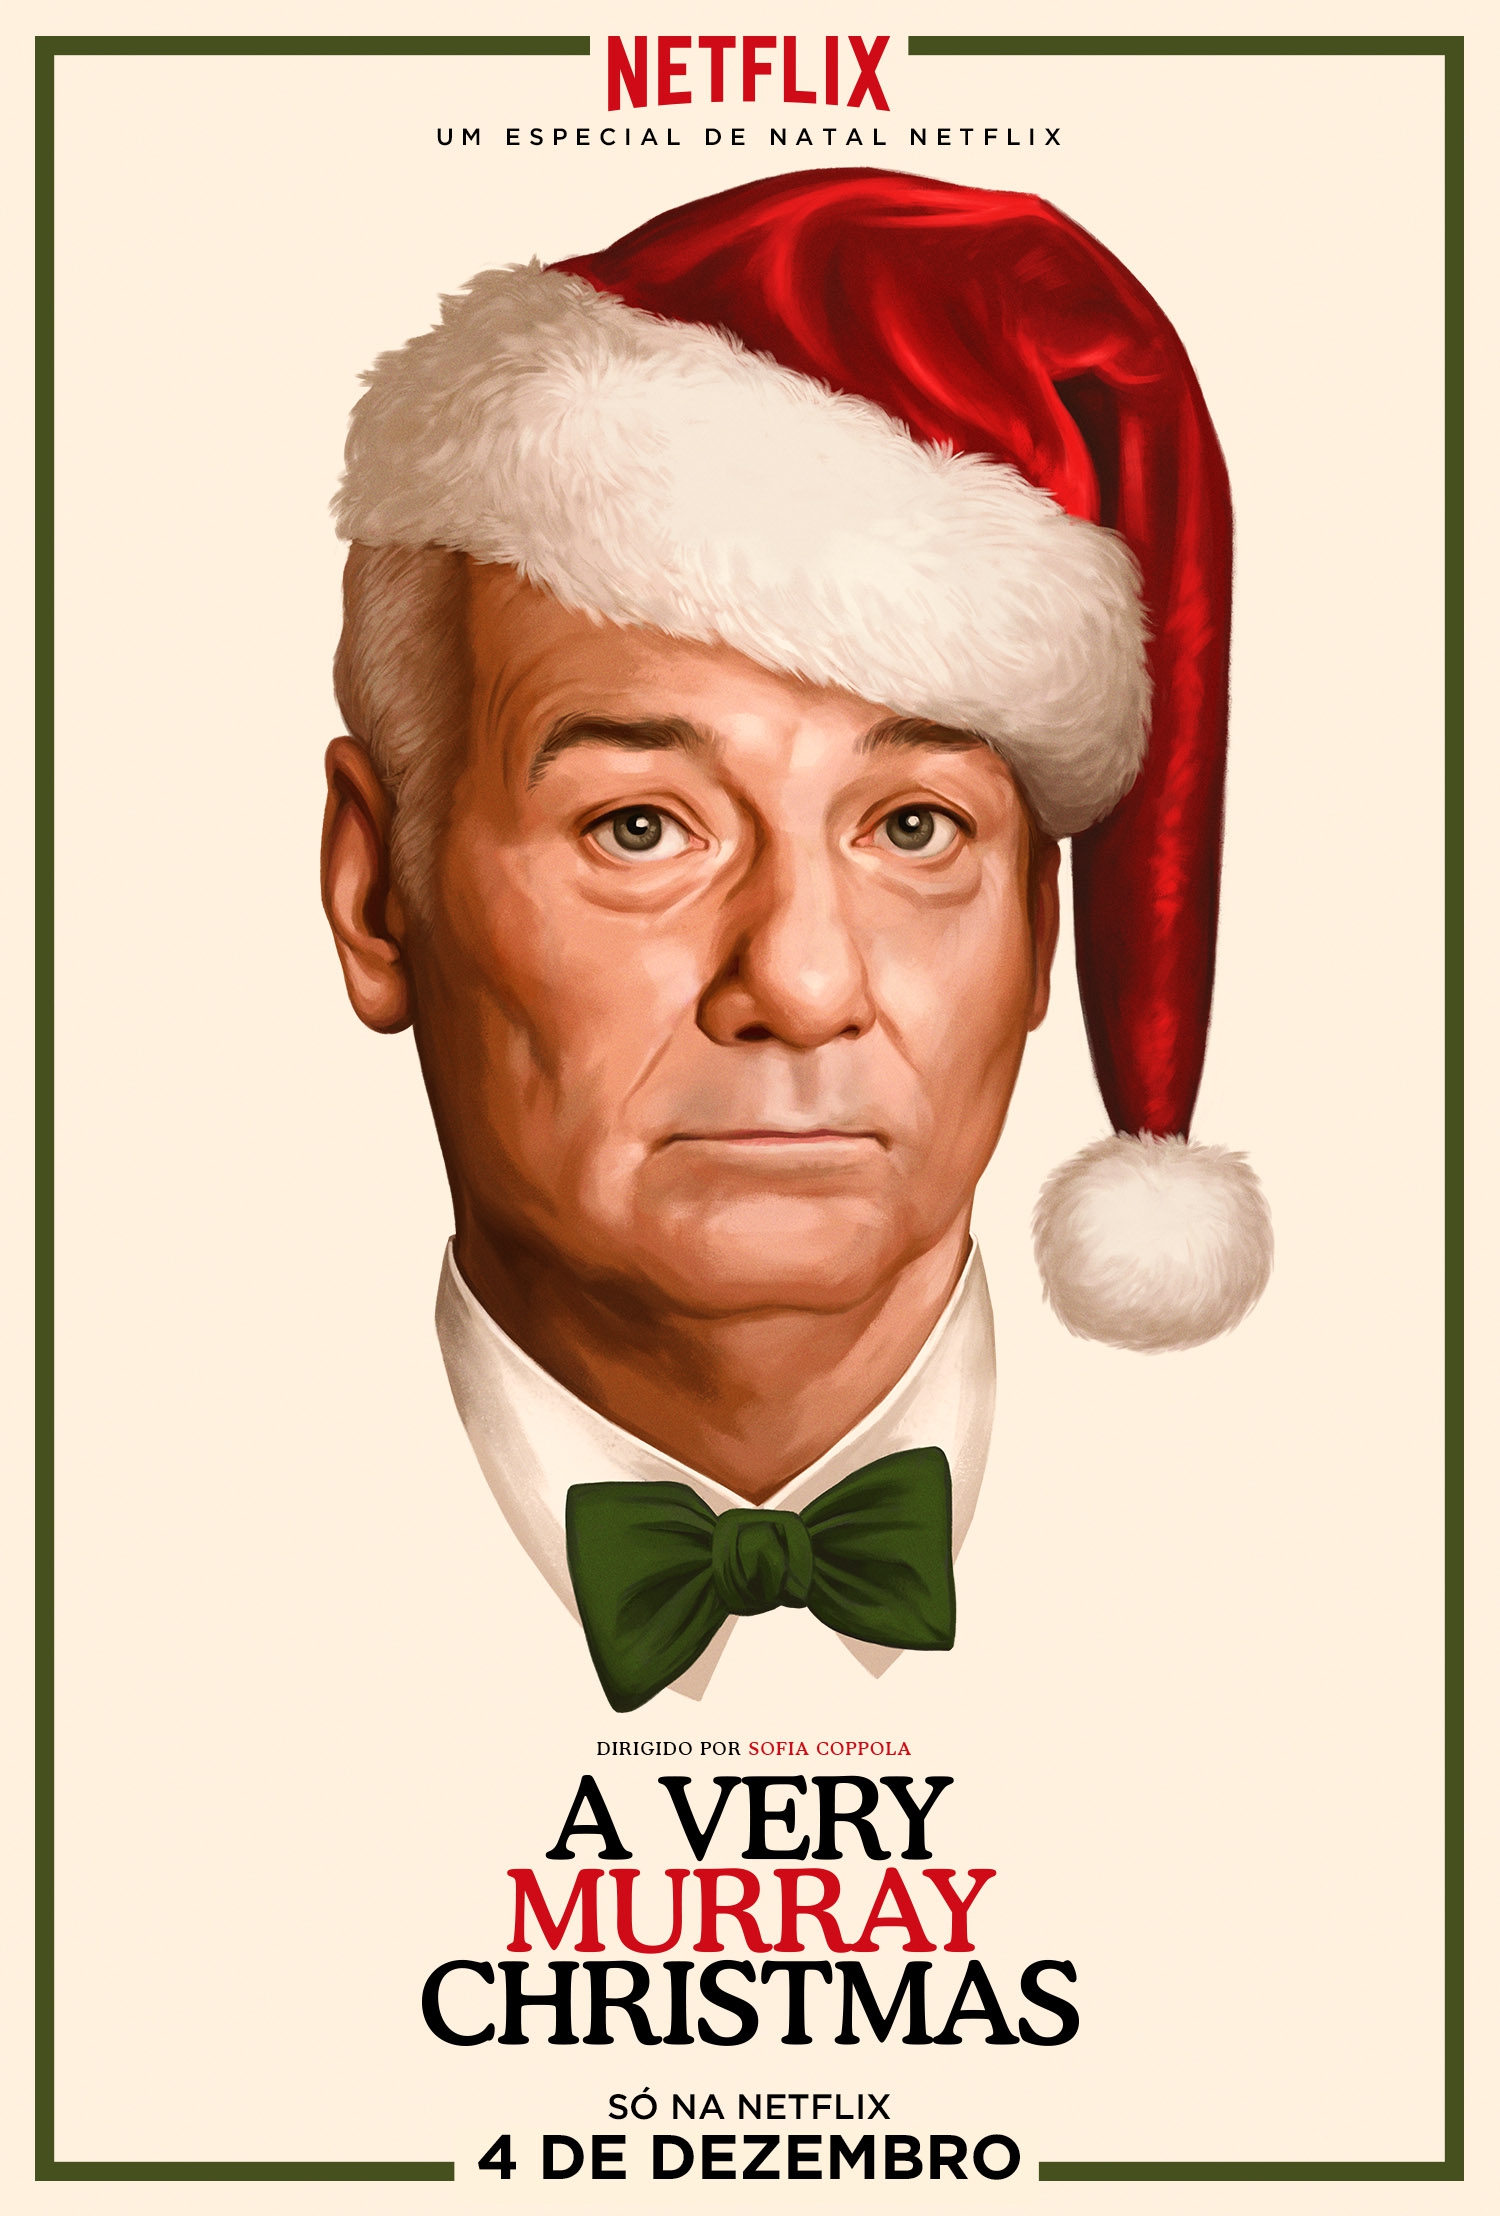  A Very Murray Christmas (2015) Poster 